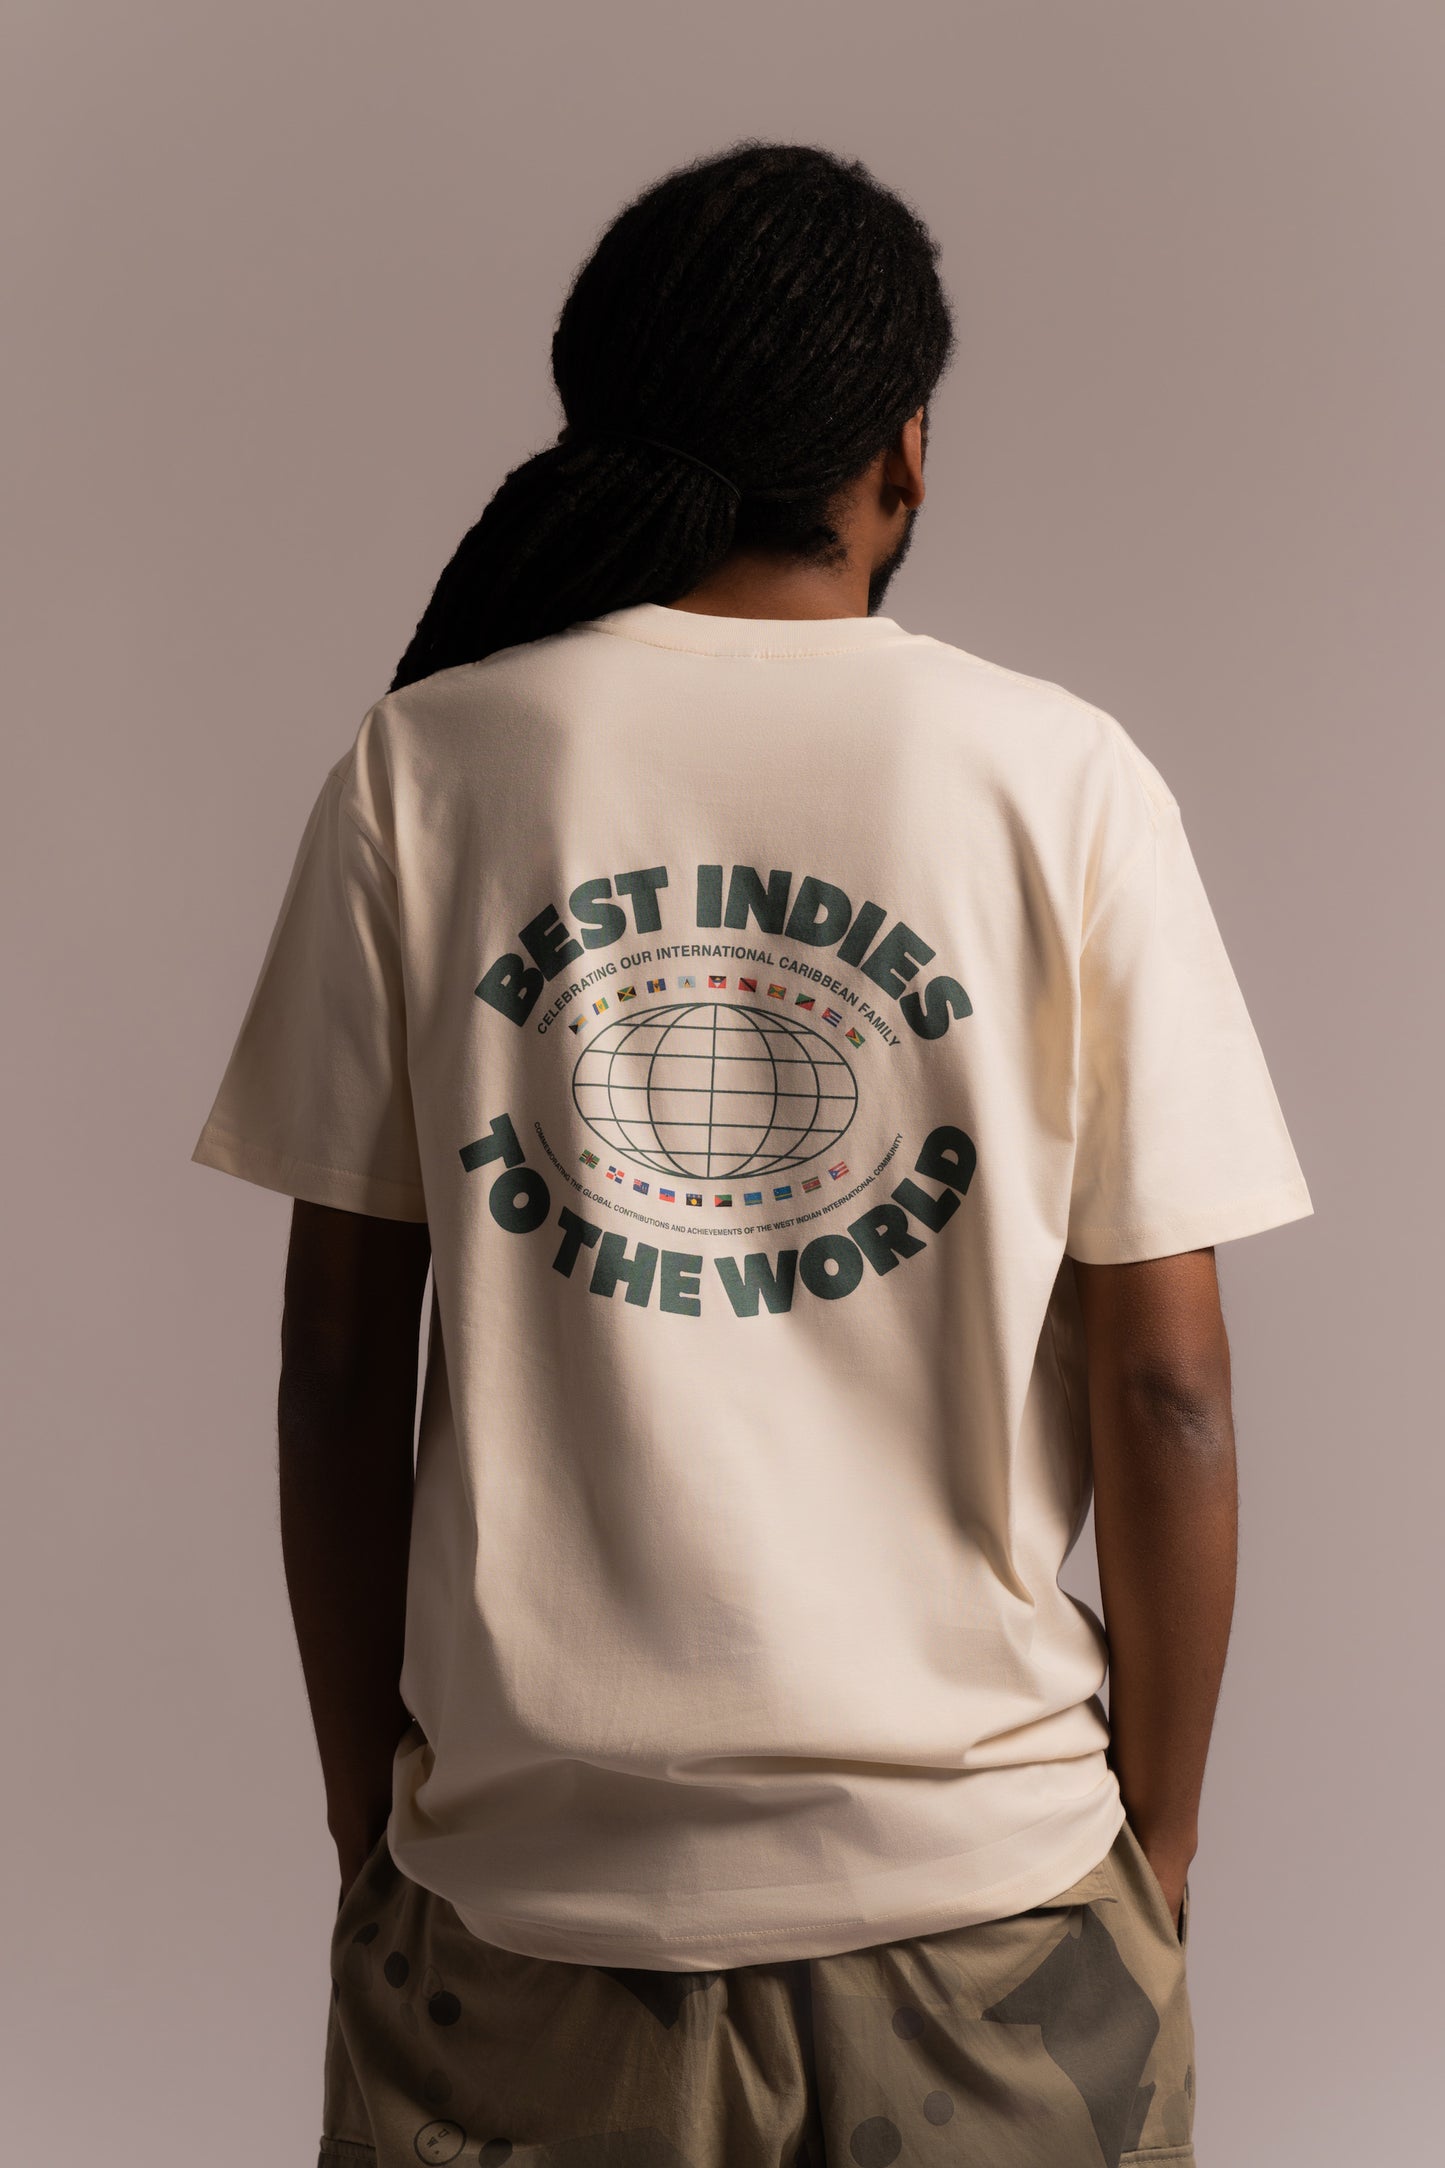 Best Indies To The World - Ecru T-Shirt